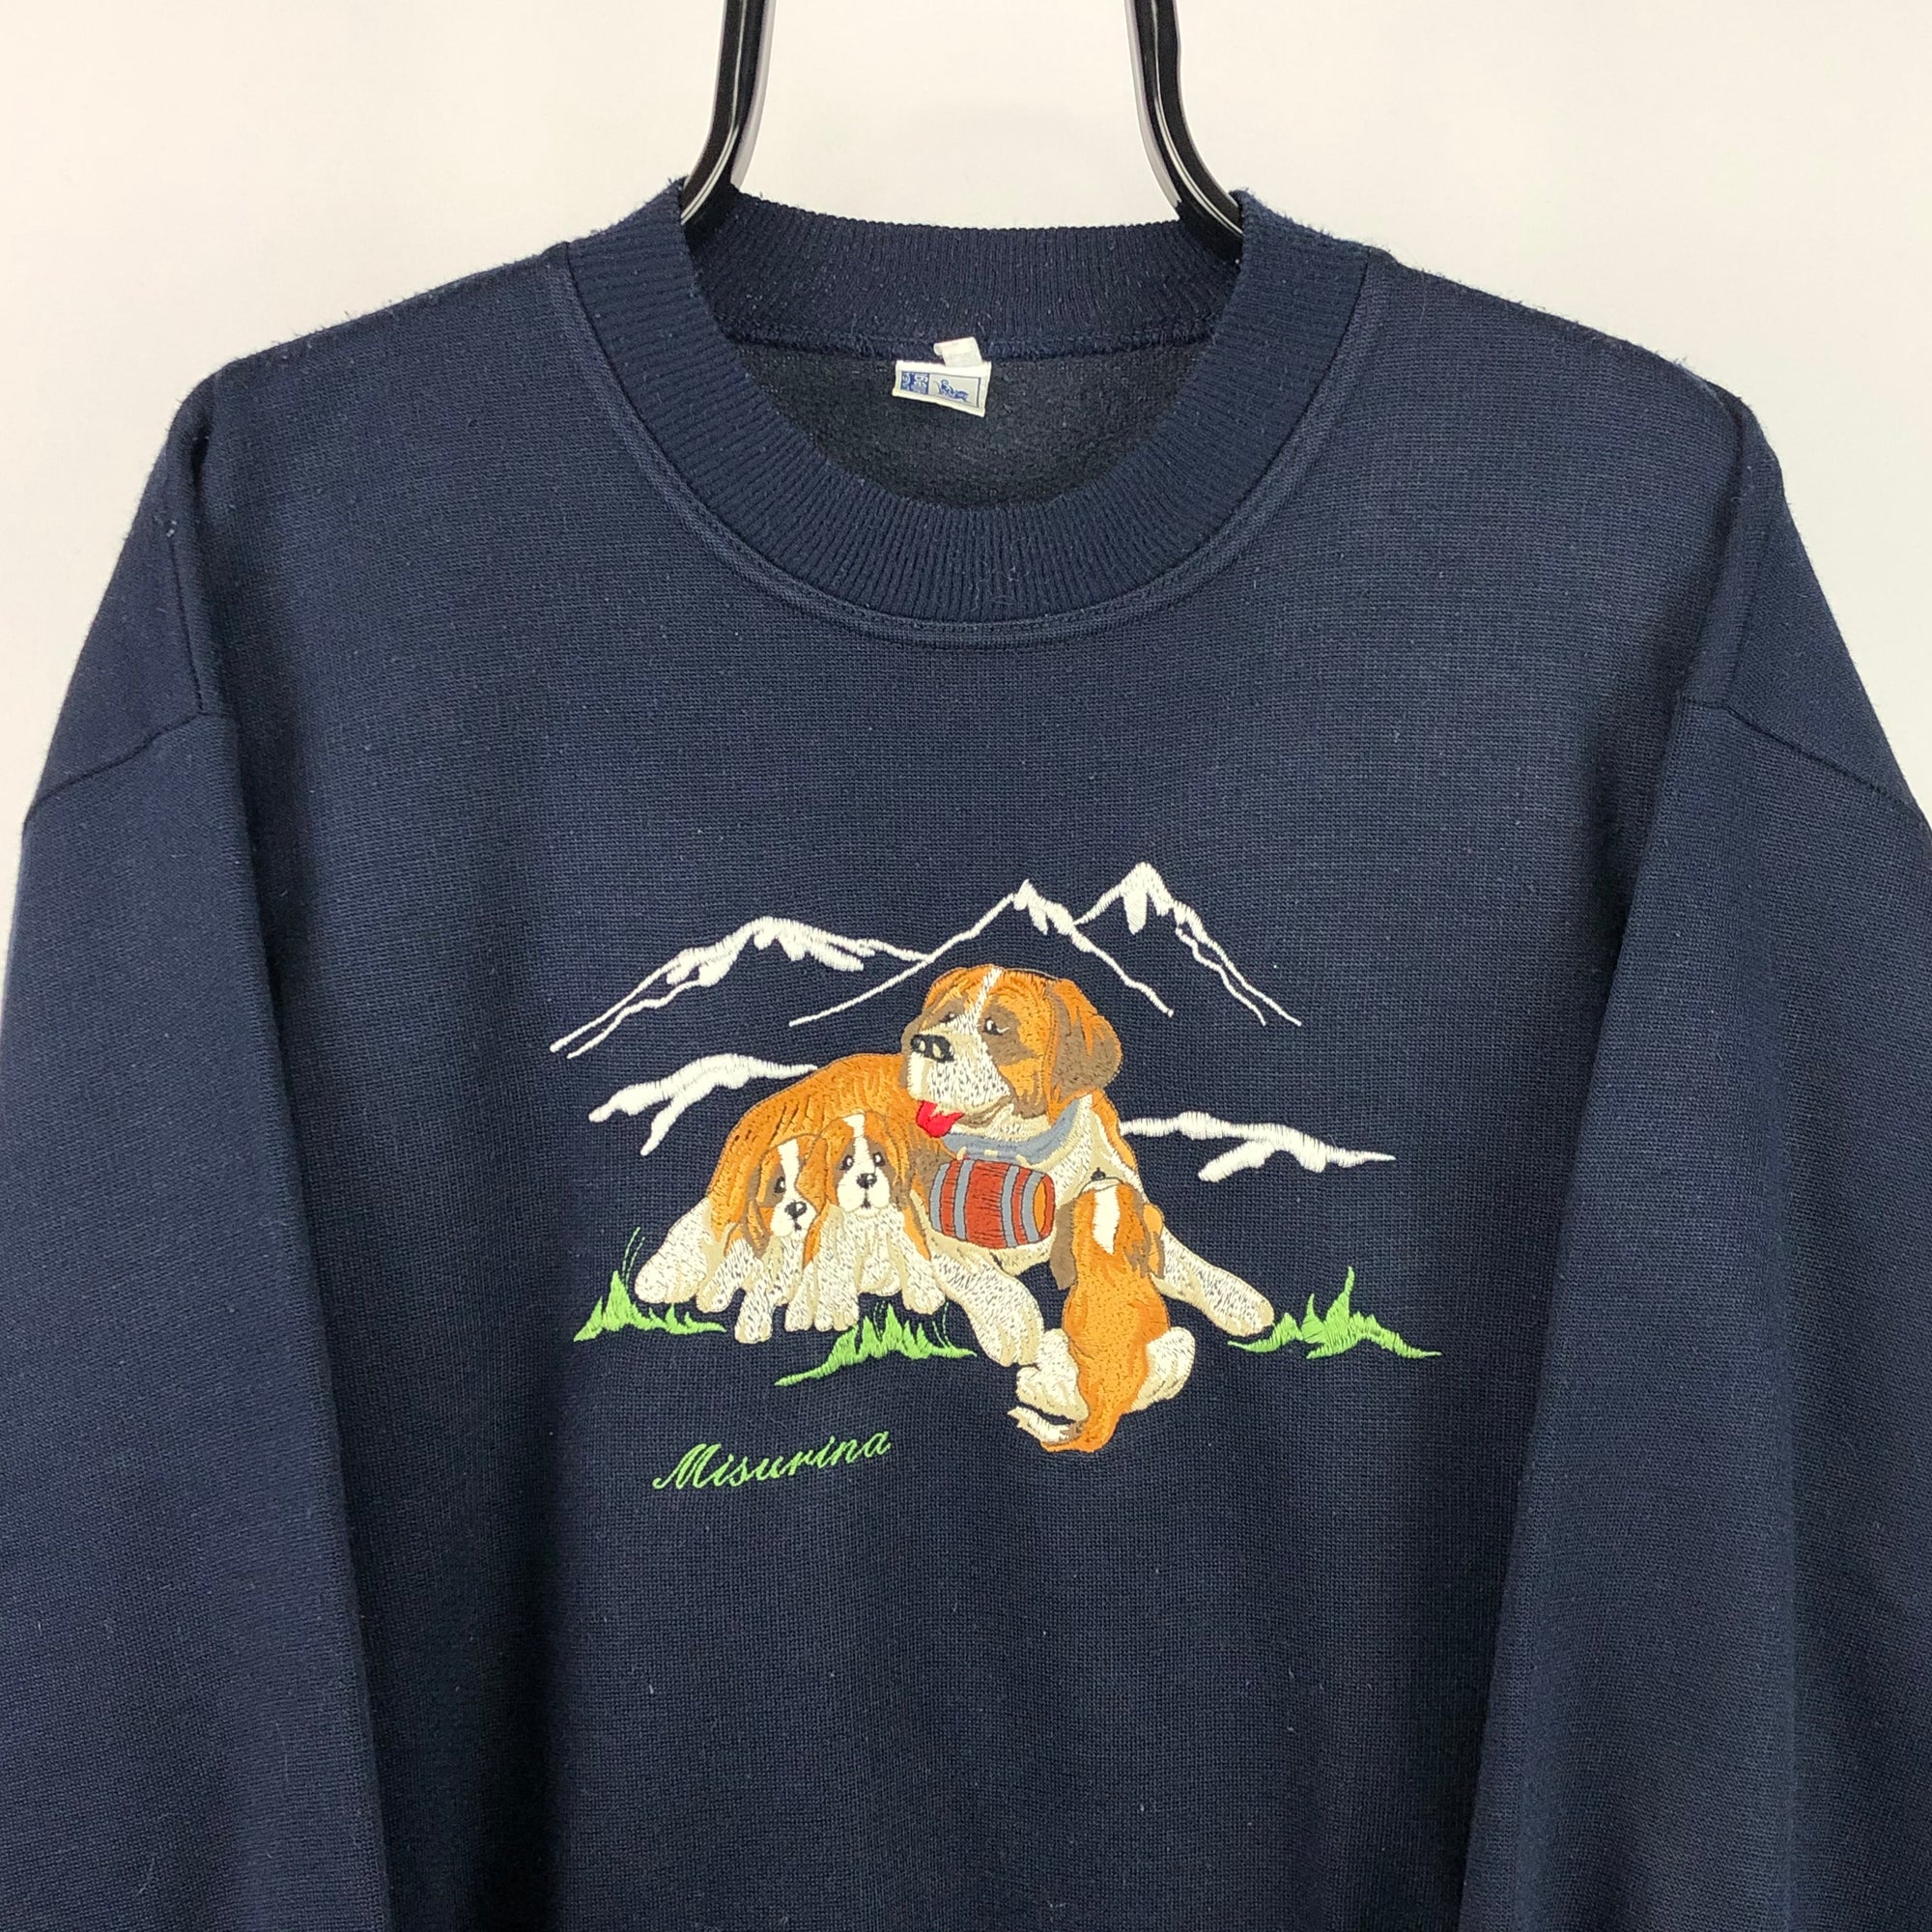 Vintage 90s Dog Embroidery Sweatshirt in Navy - Men's Medium/Women's Large